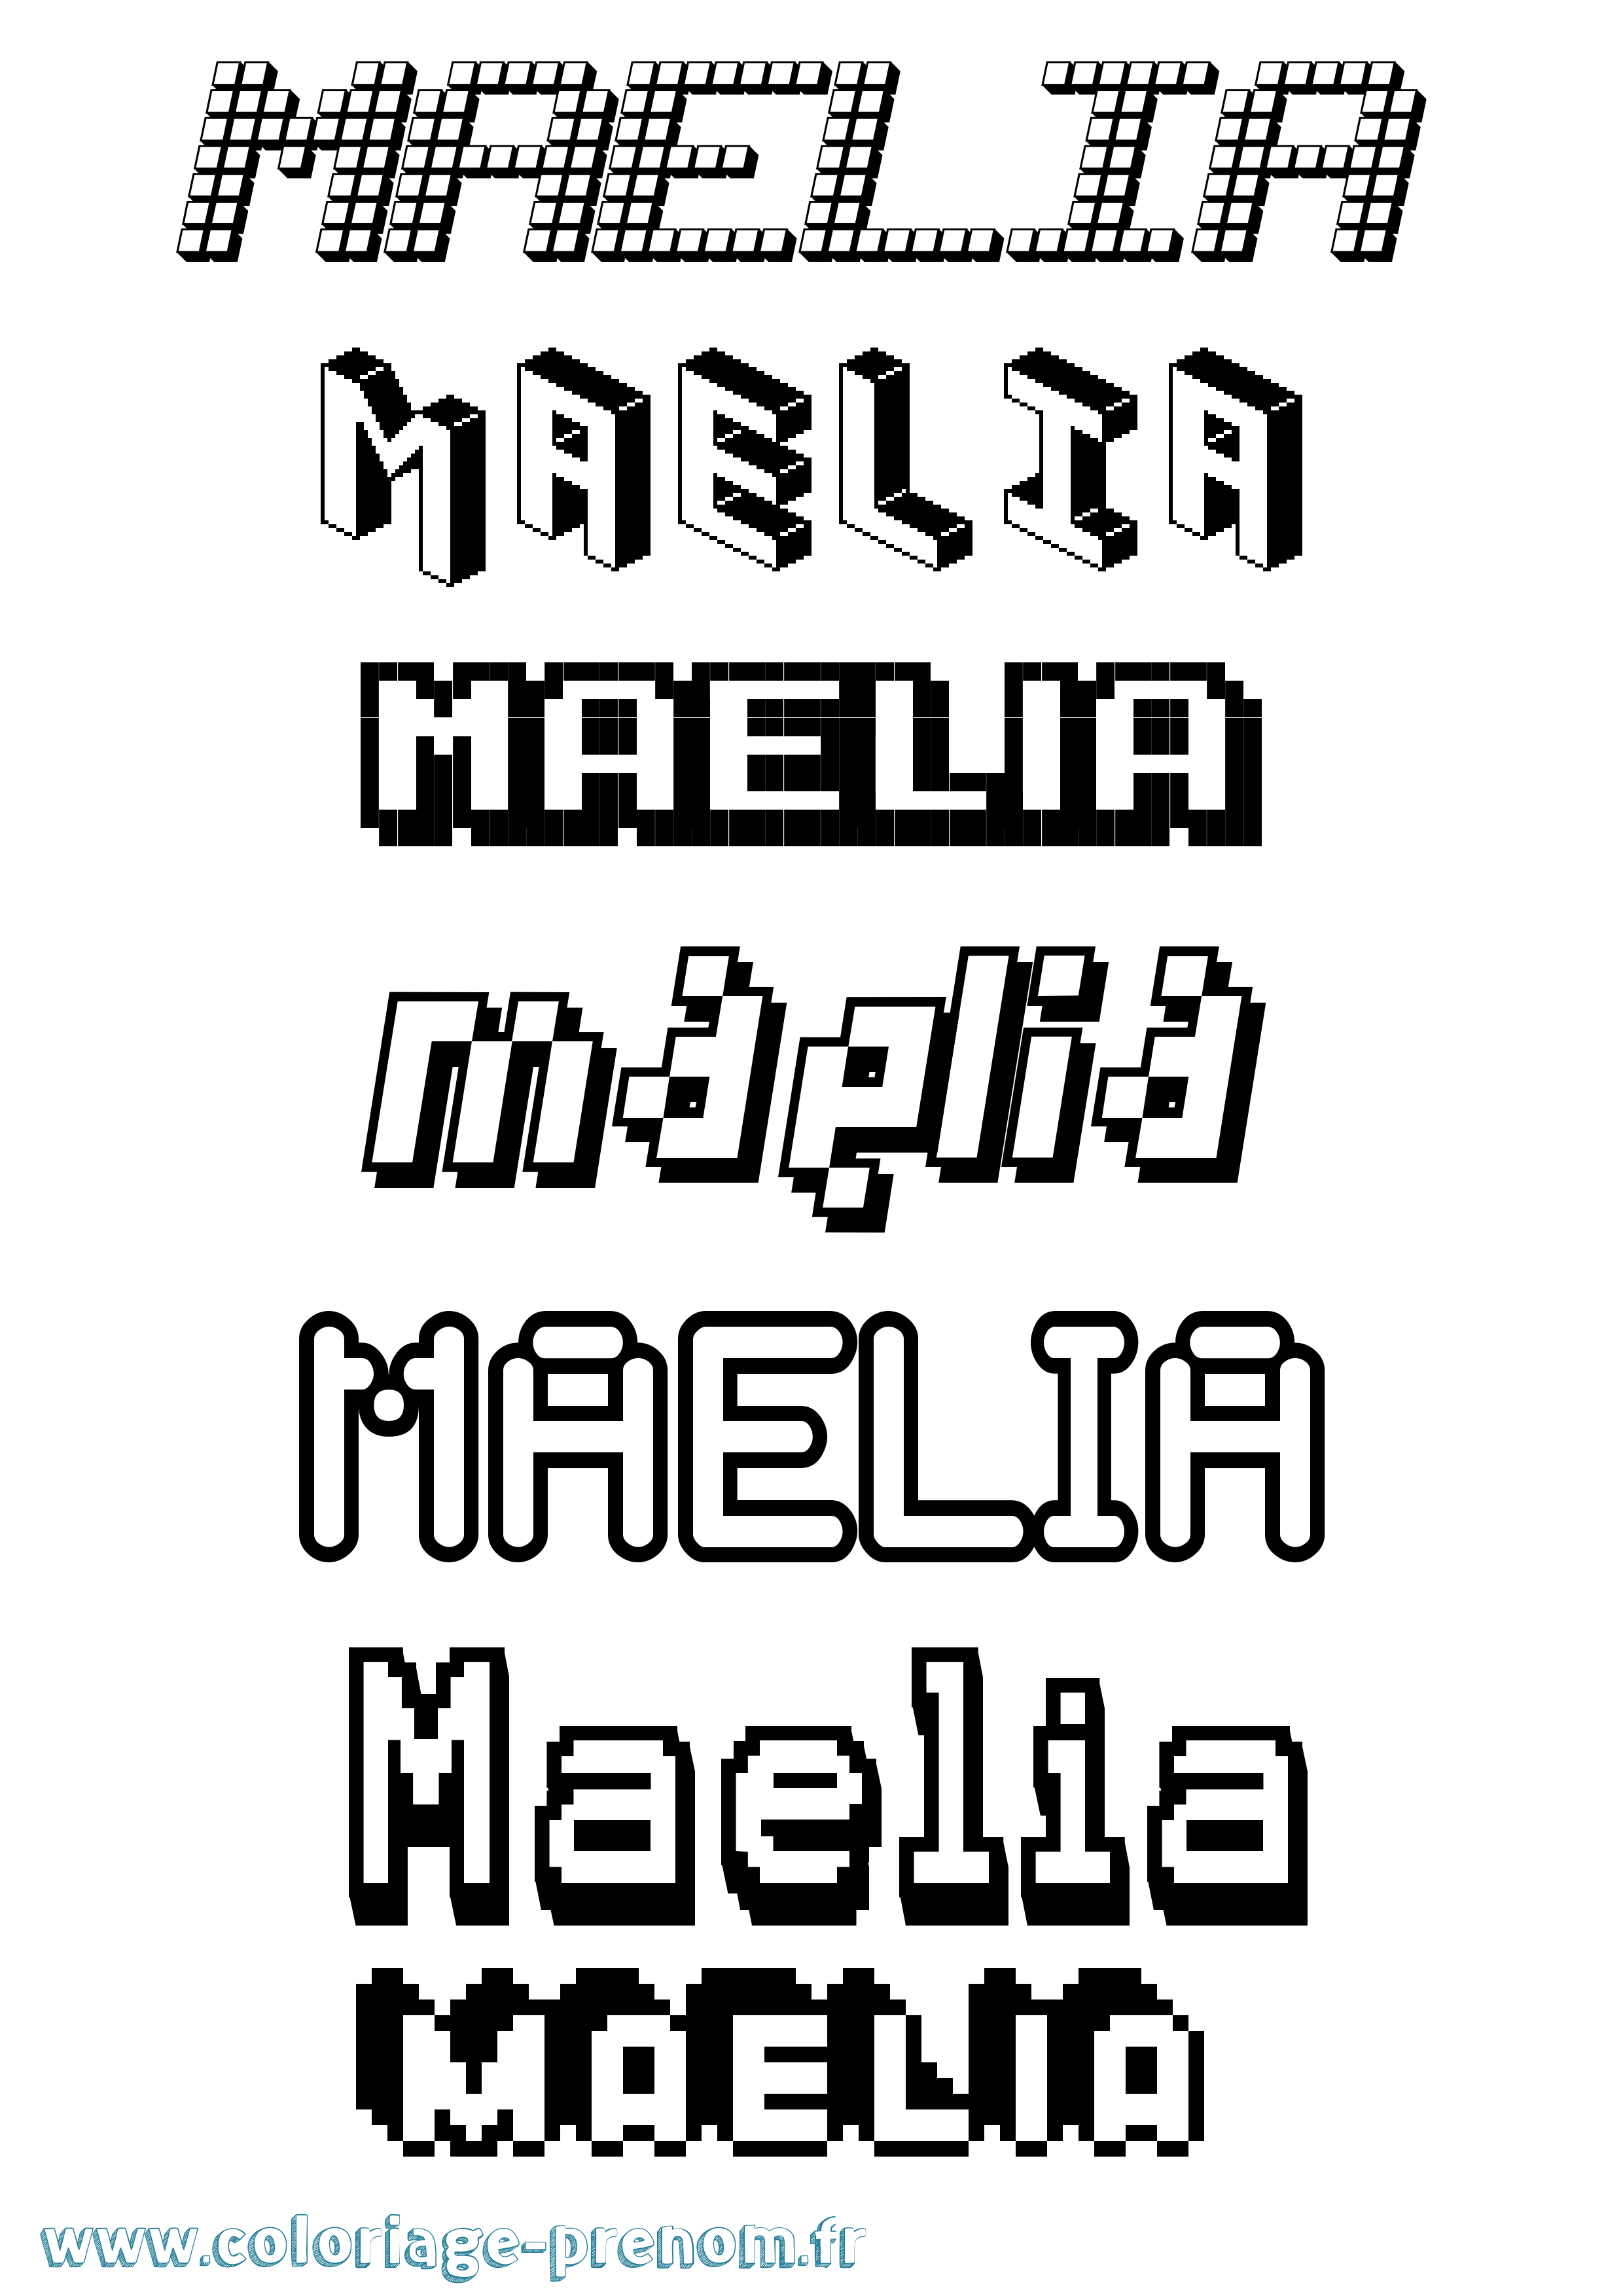 Coloriage prénom Maelia Pixel